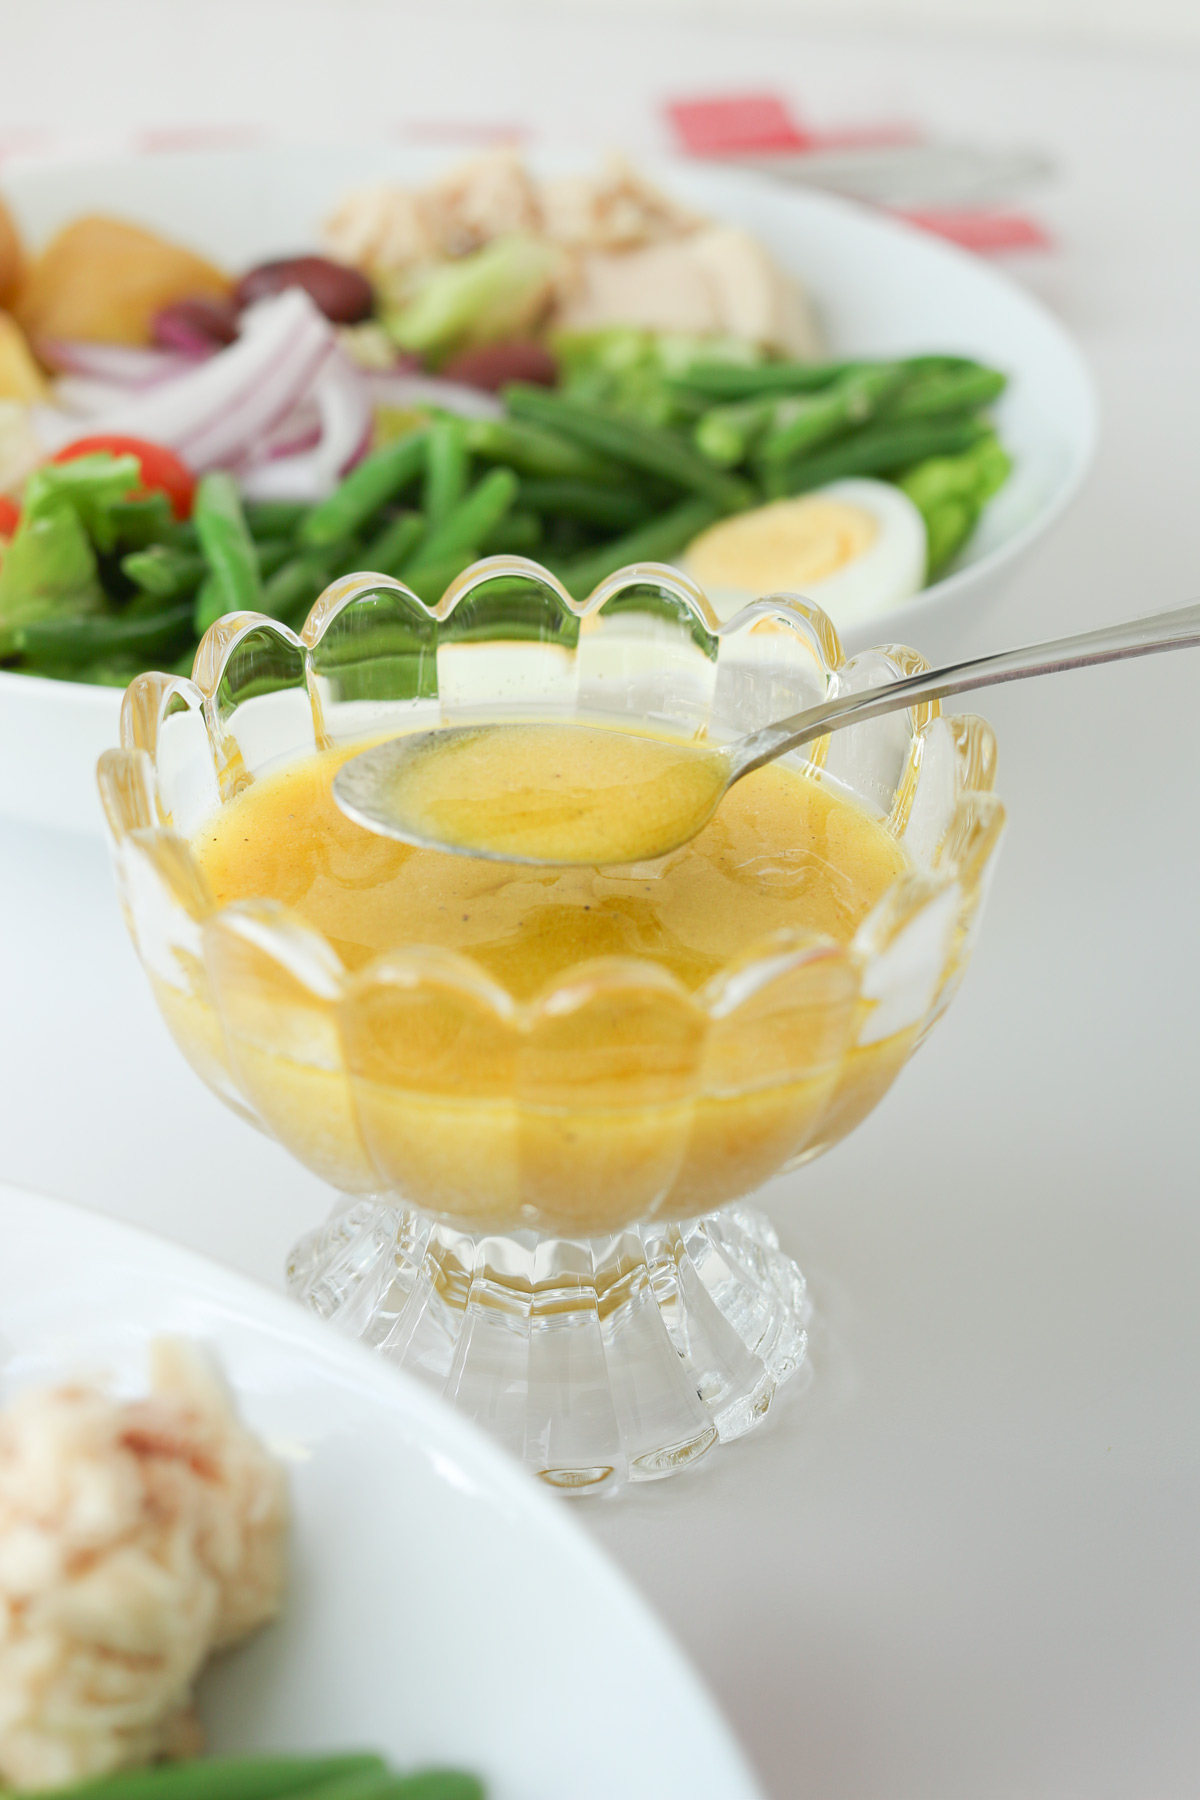 spoon dishing up dijon vinaigrette from decorative glass bowl.